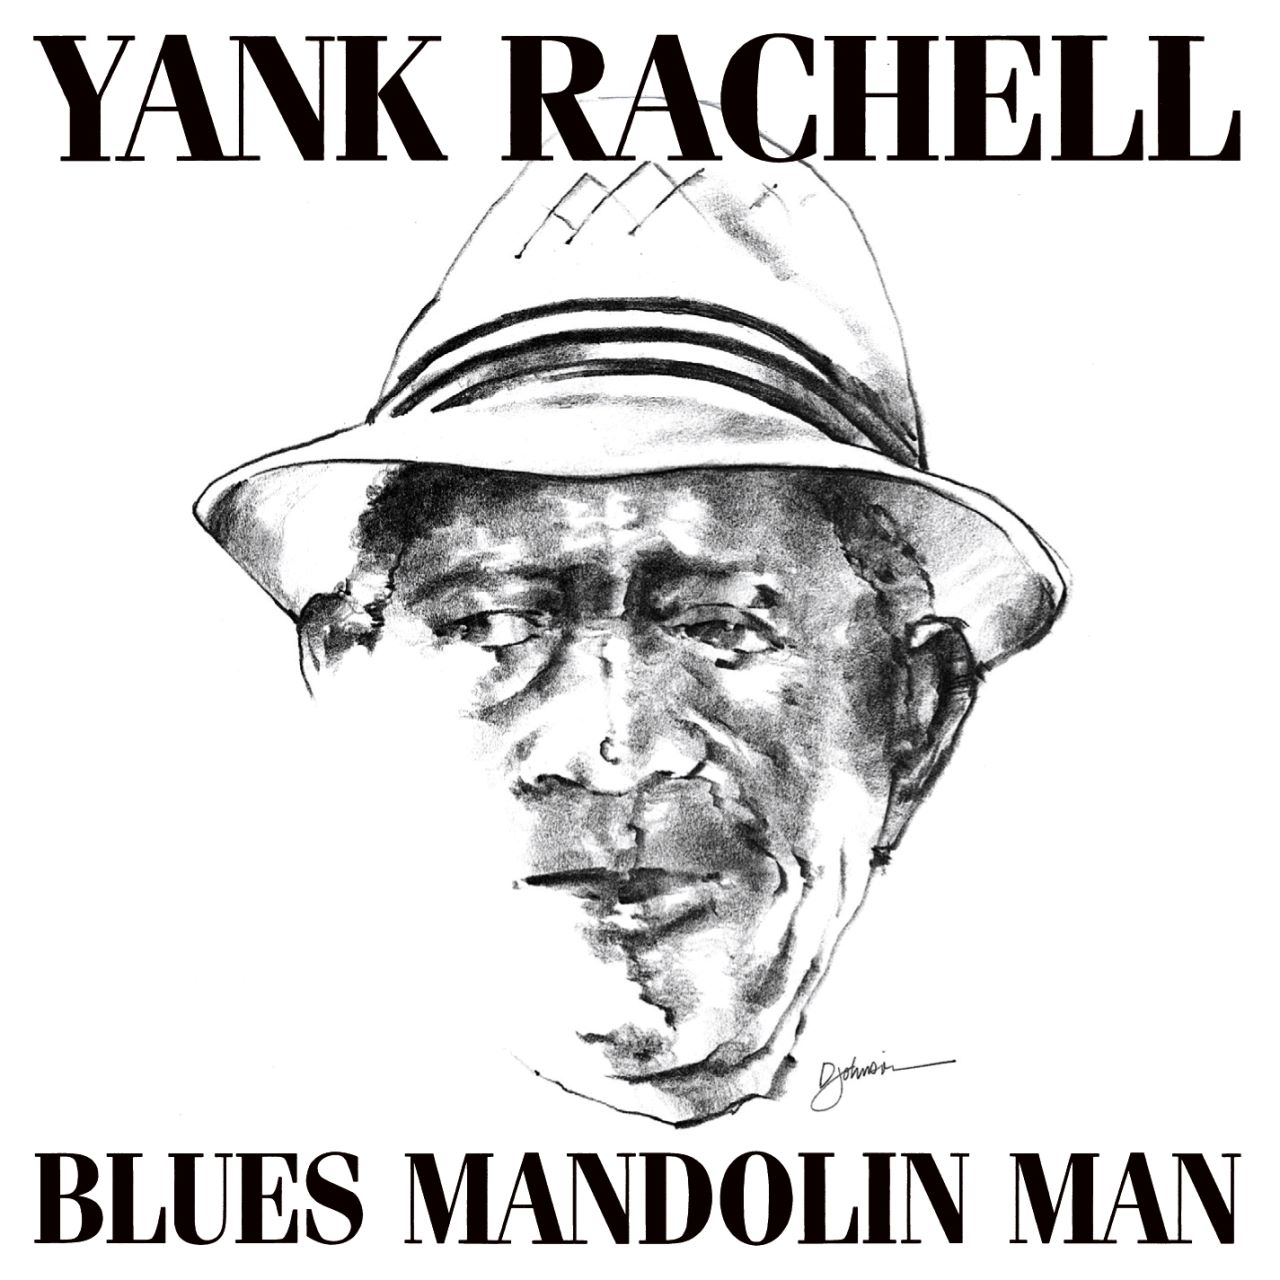 Yank Rachell - Blues Mandolin Man cover album